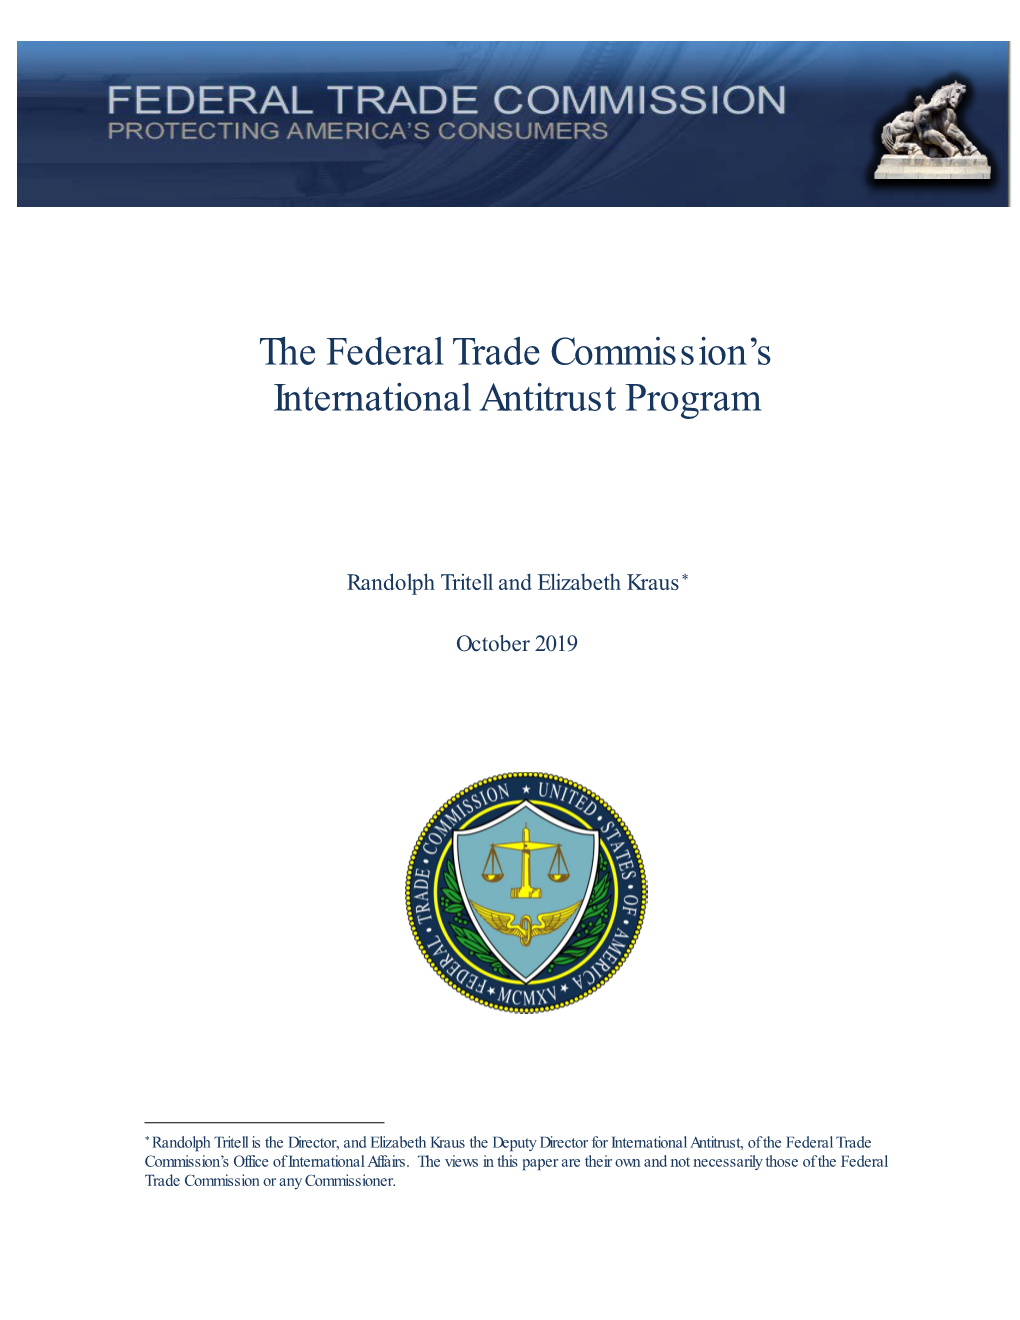 The Federal Trade Commission's International Antitrust Program